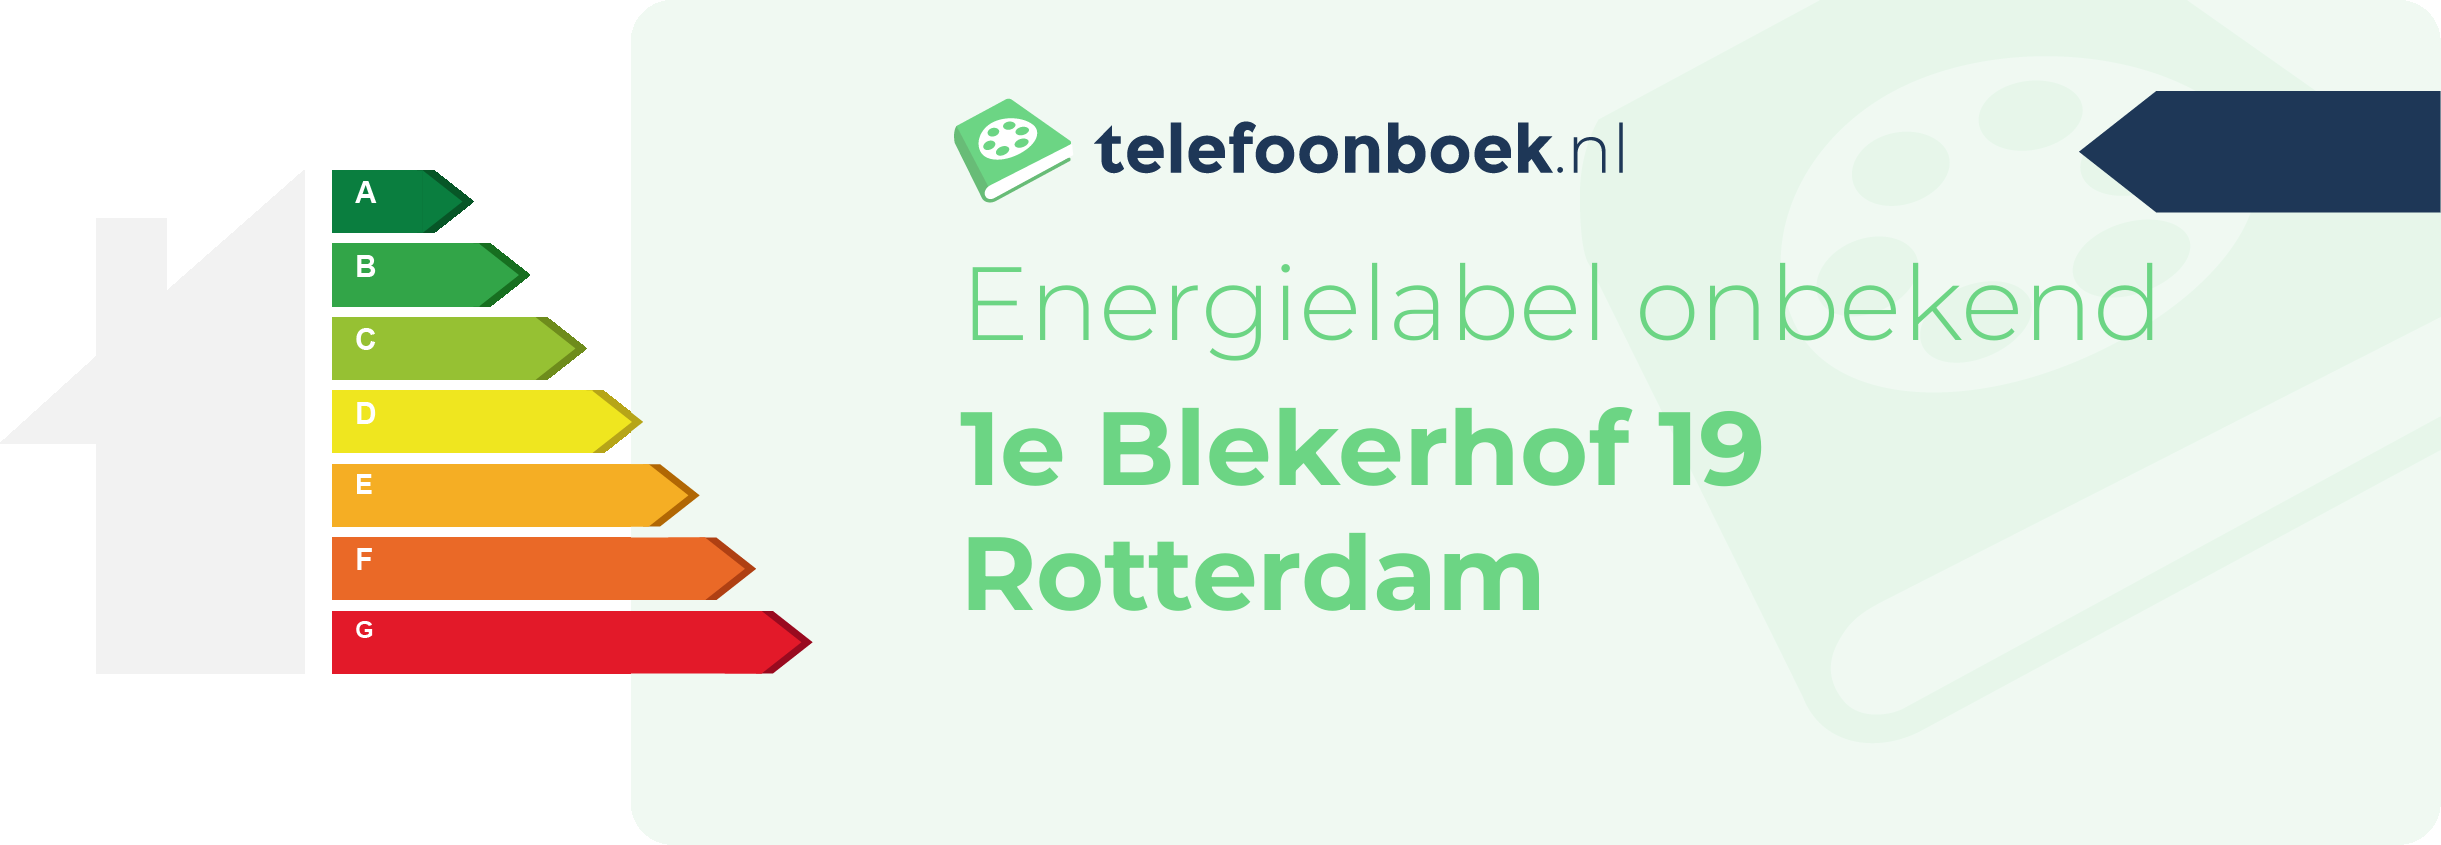 Energielabel 1e Blekerhof 19 Rotterdam